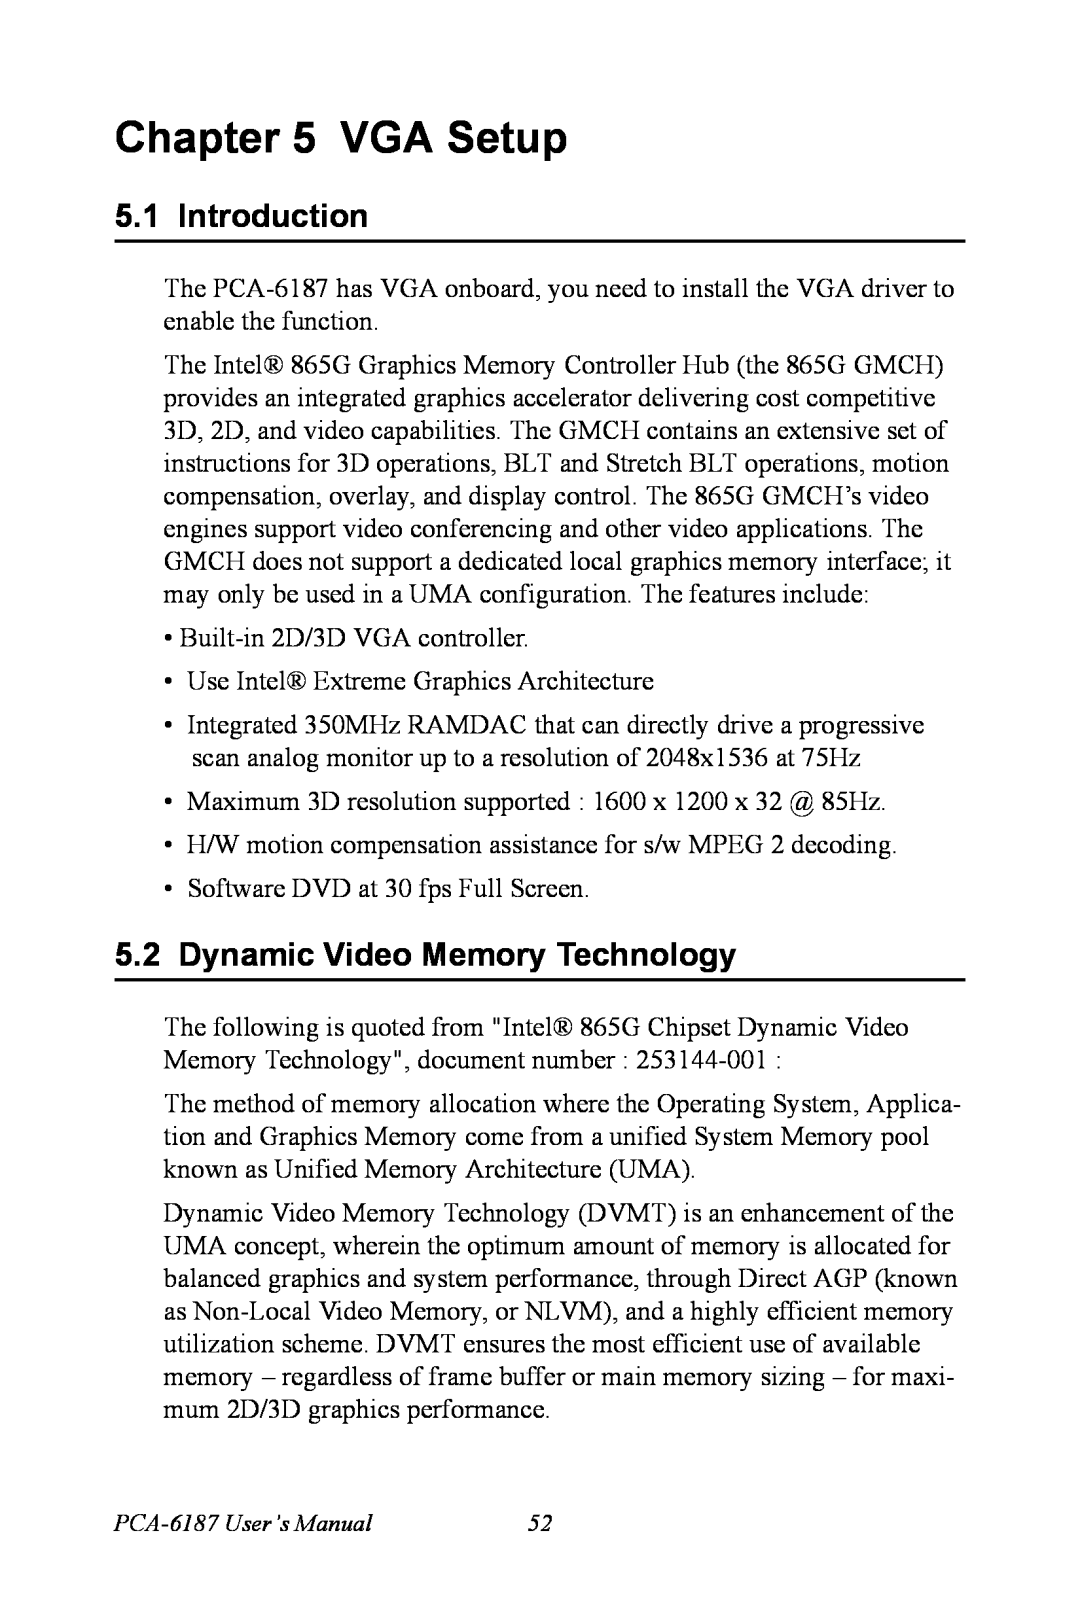 Advantech PCA-6187 user manual VGA Setup, Introduction, Dynamic Video Memory Technology 